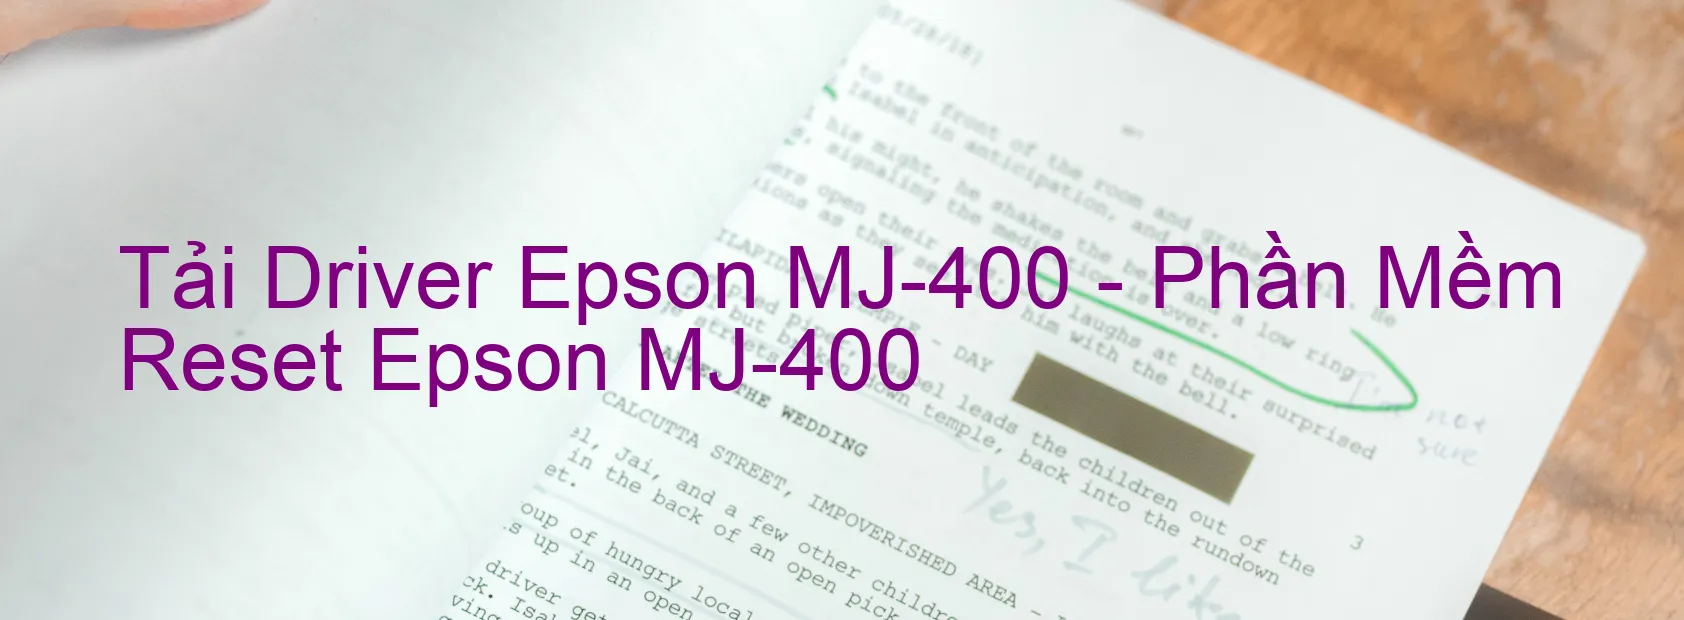 Driver Epson MJ-400, Phần Mềm Reset Epson MJ-400